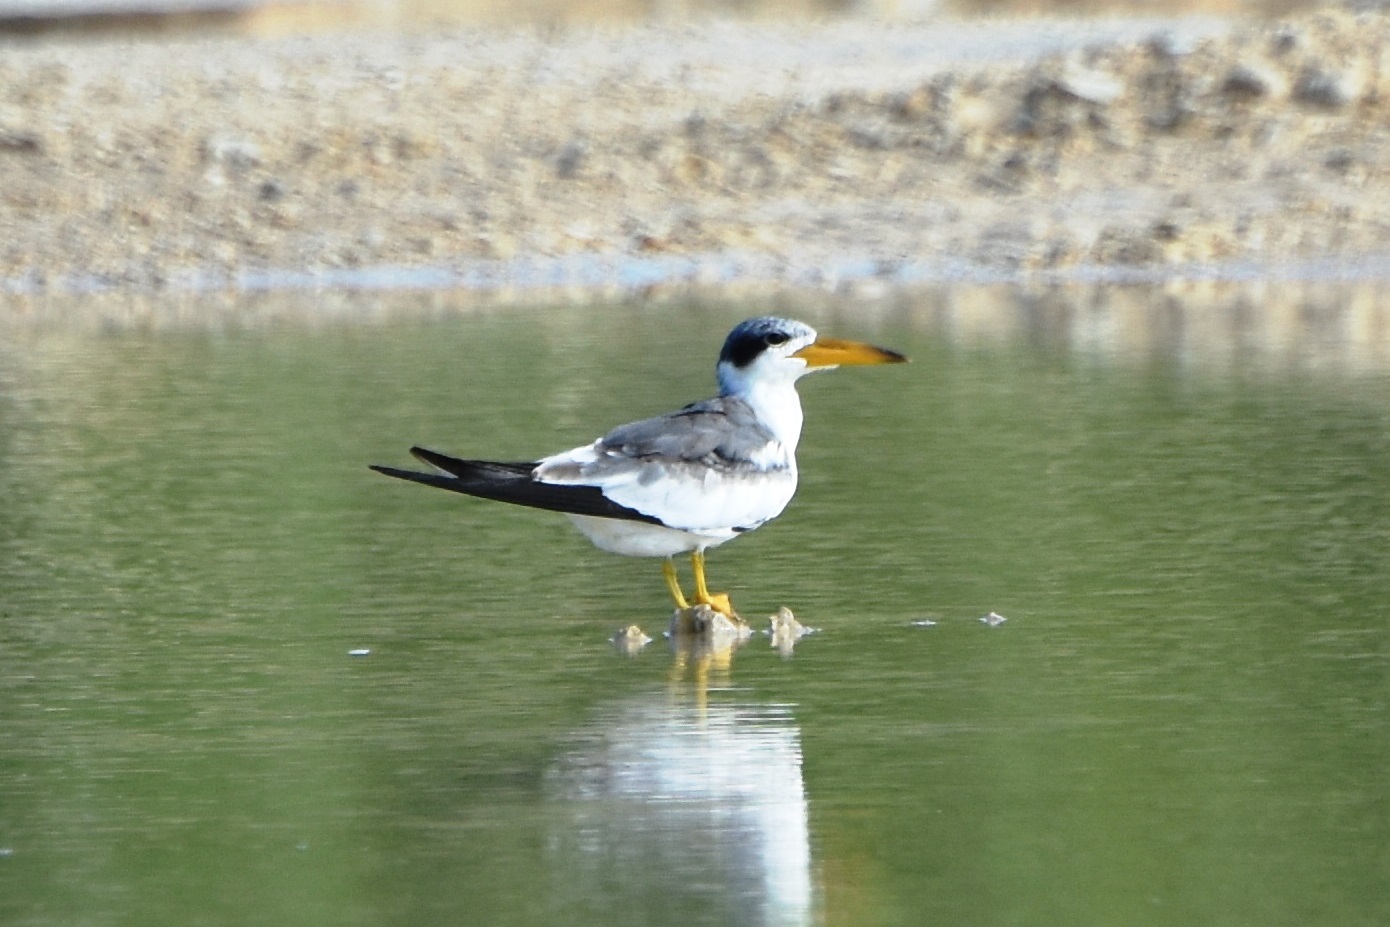 Large-billed Tern